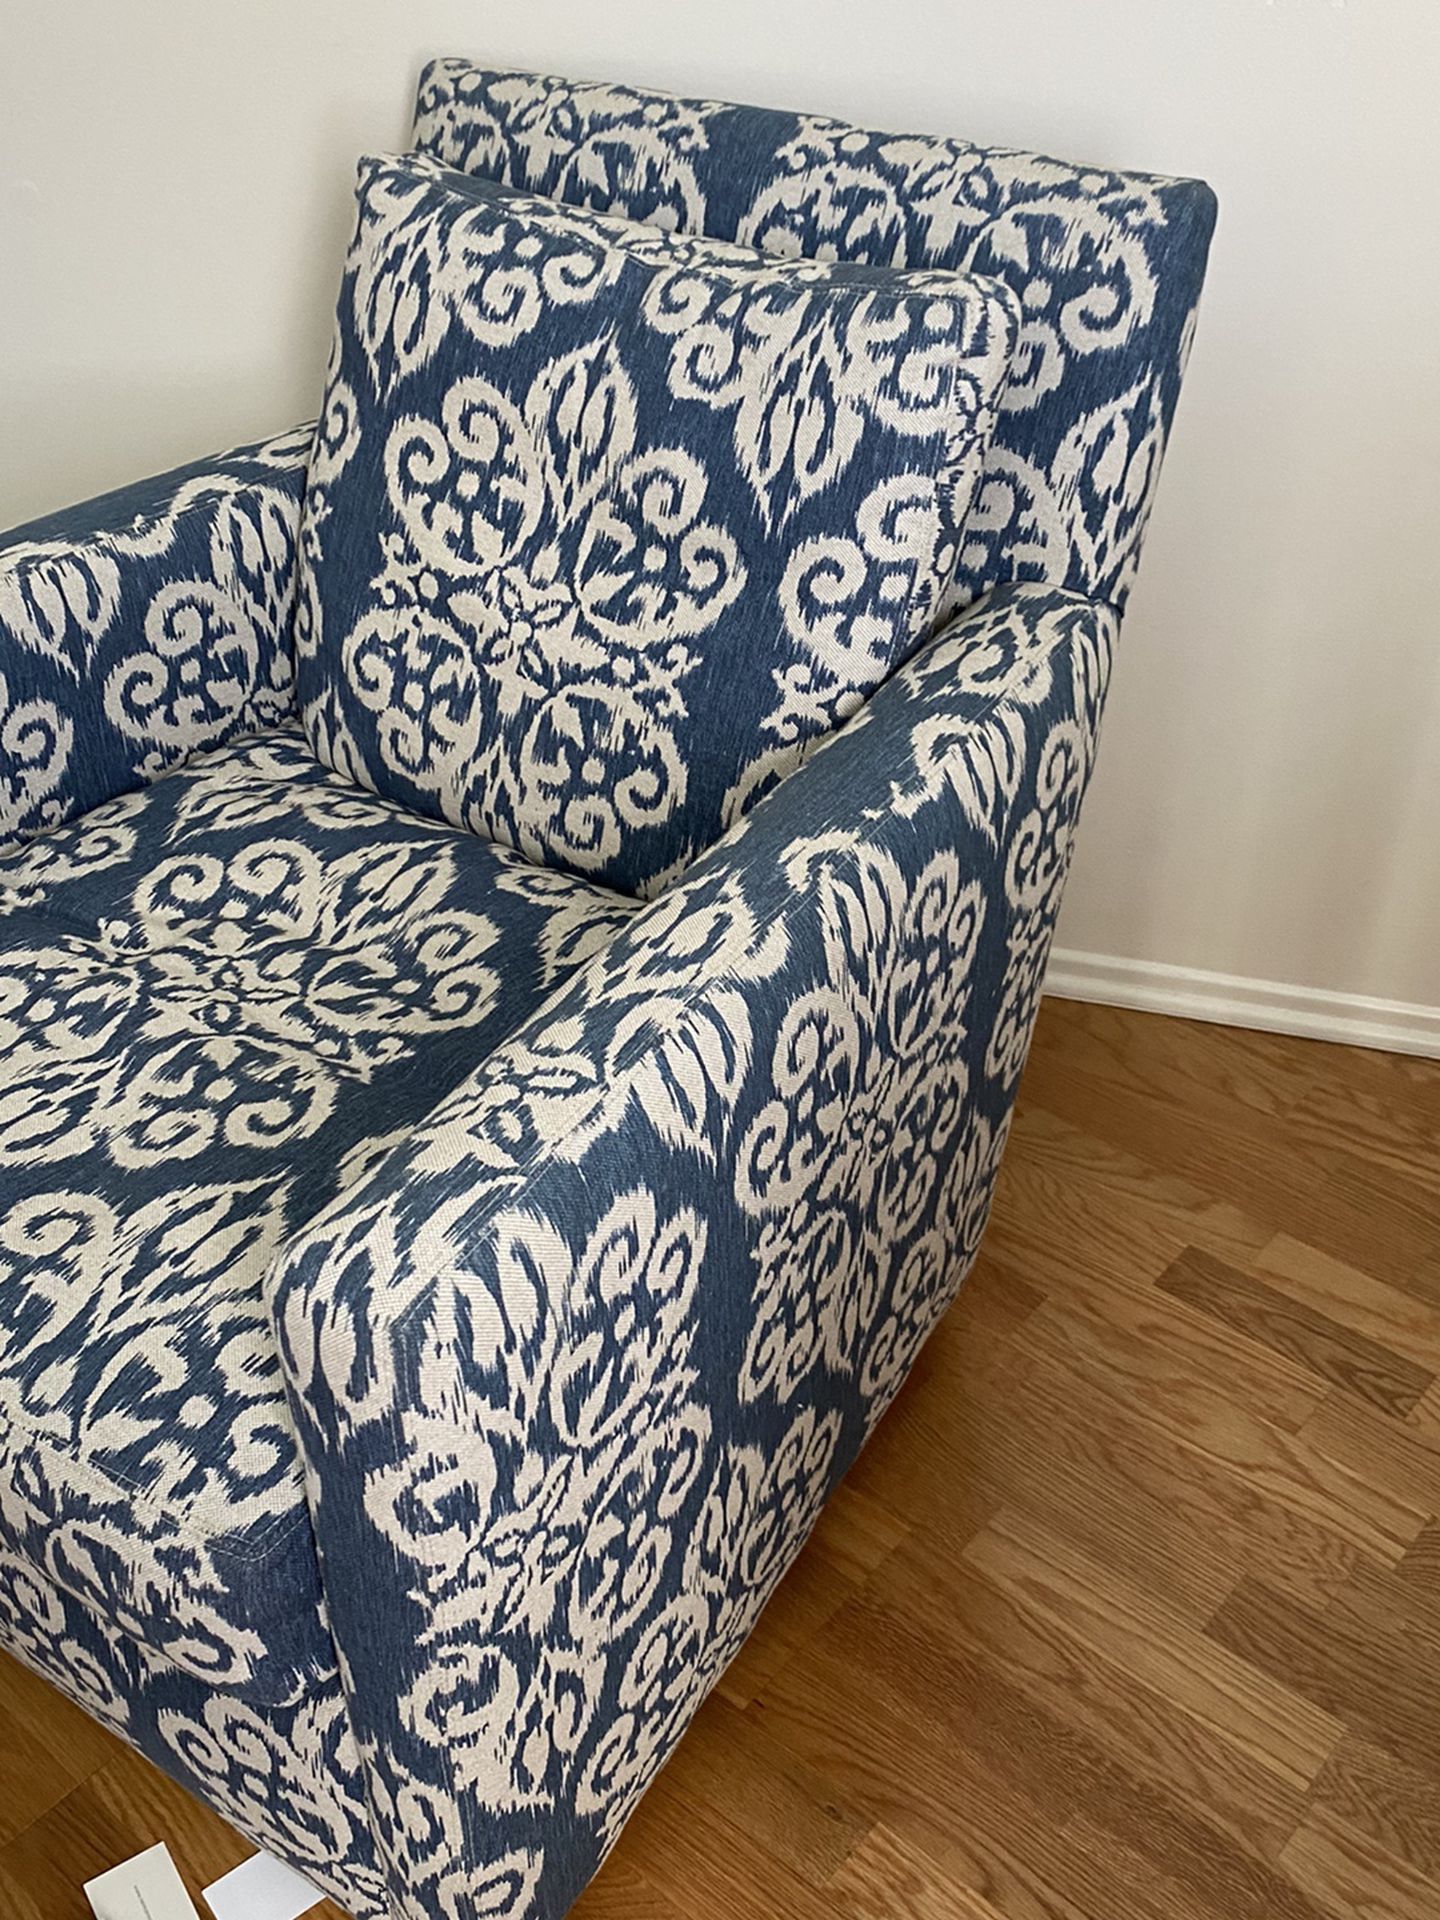 Blue Floral Rocking Chair-$150